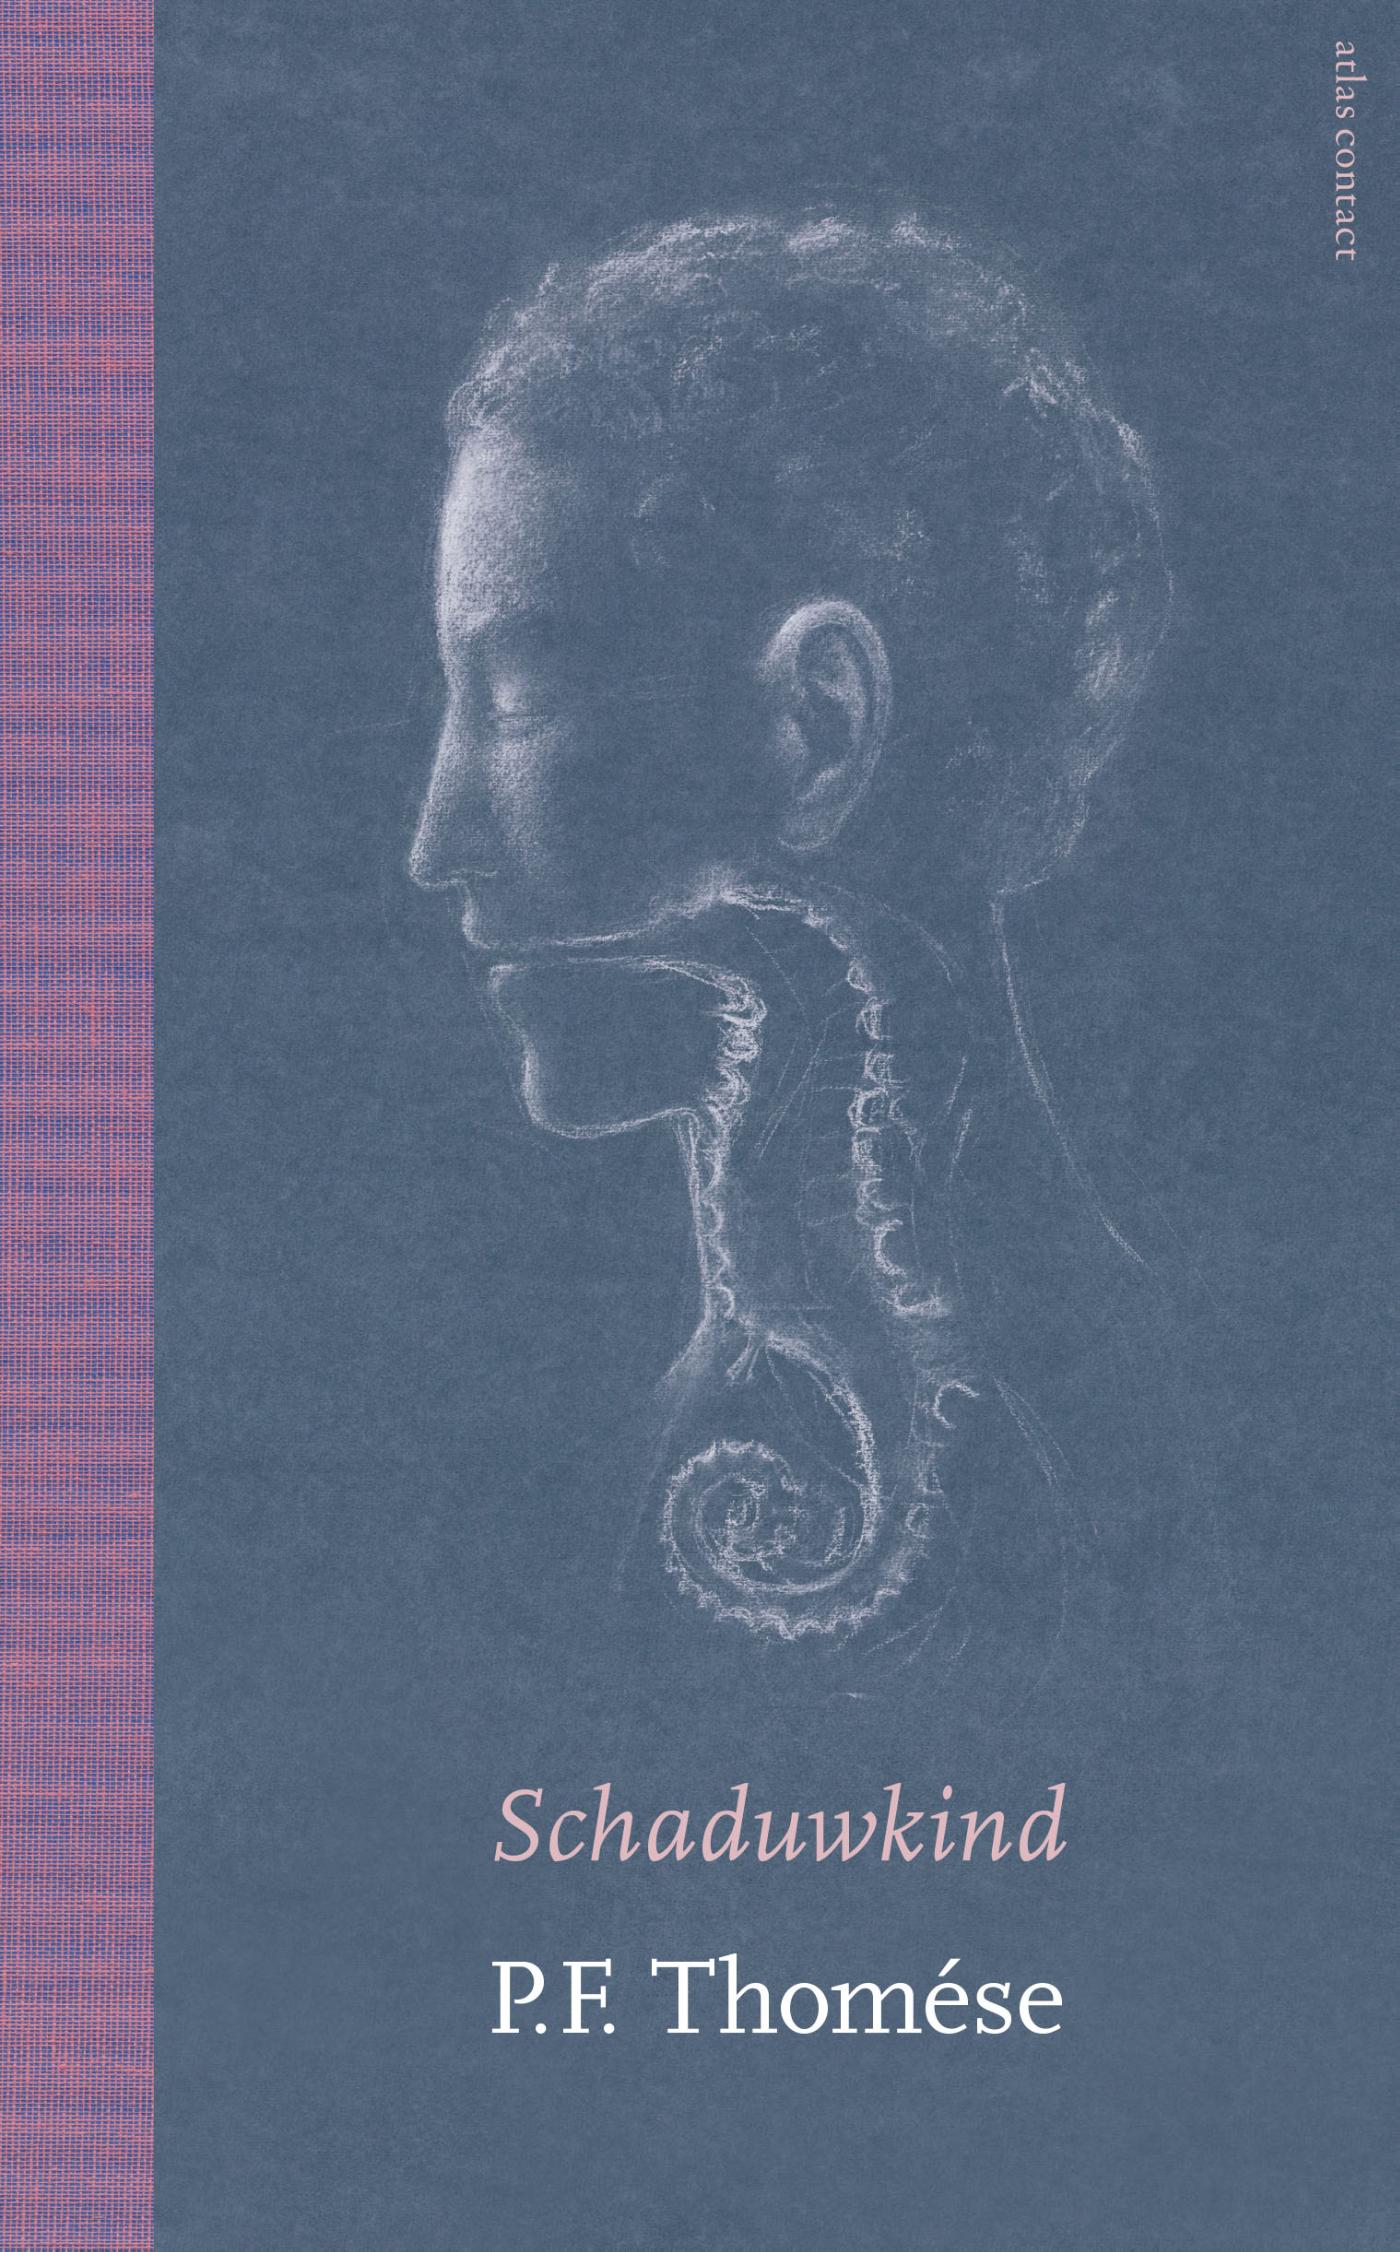 Schaduwkind (Ebook)